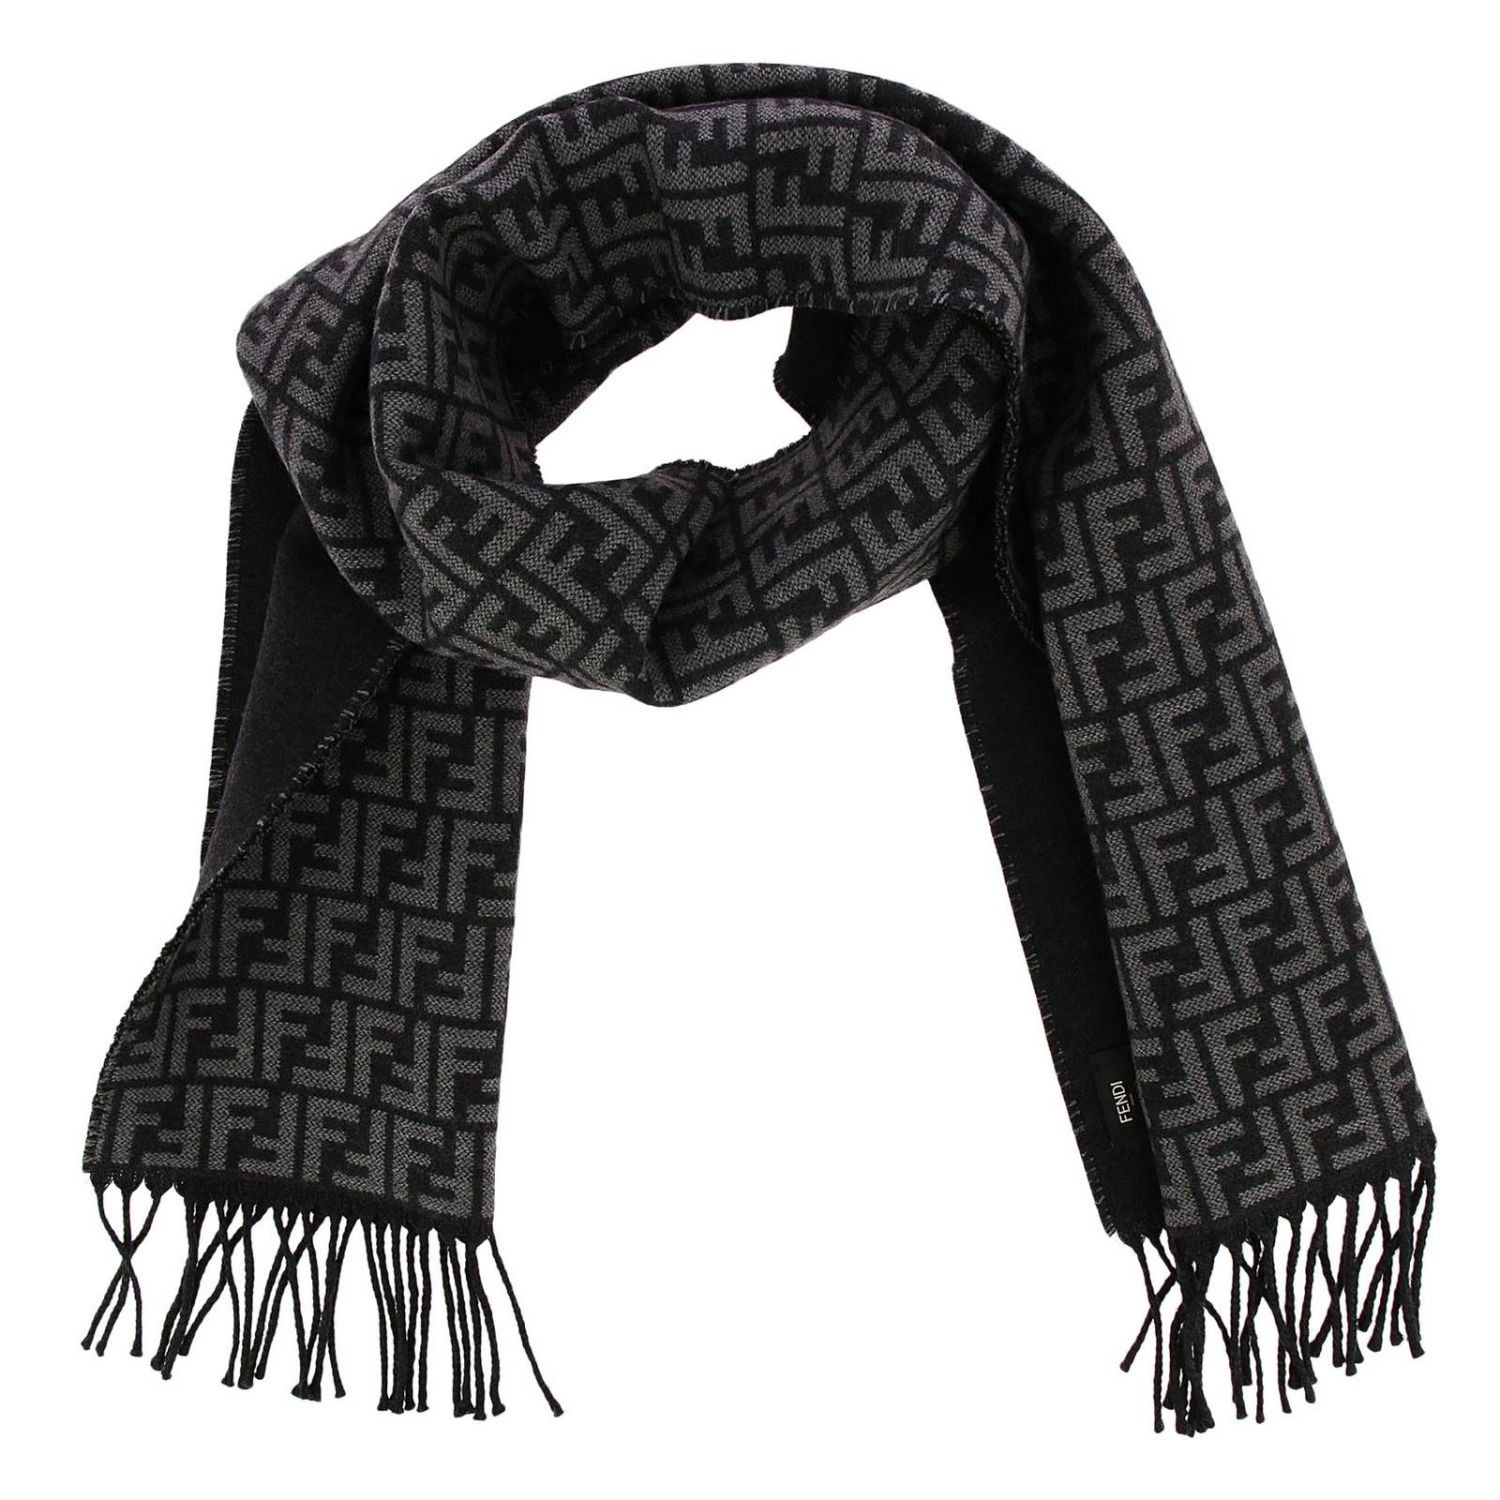 fendi black scarf